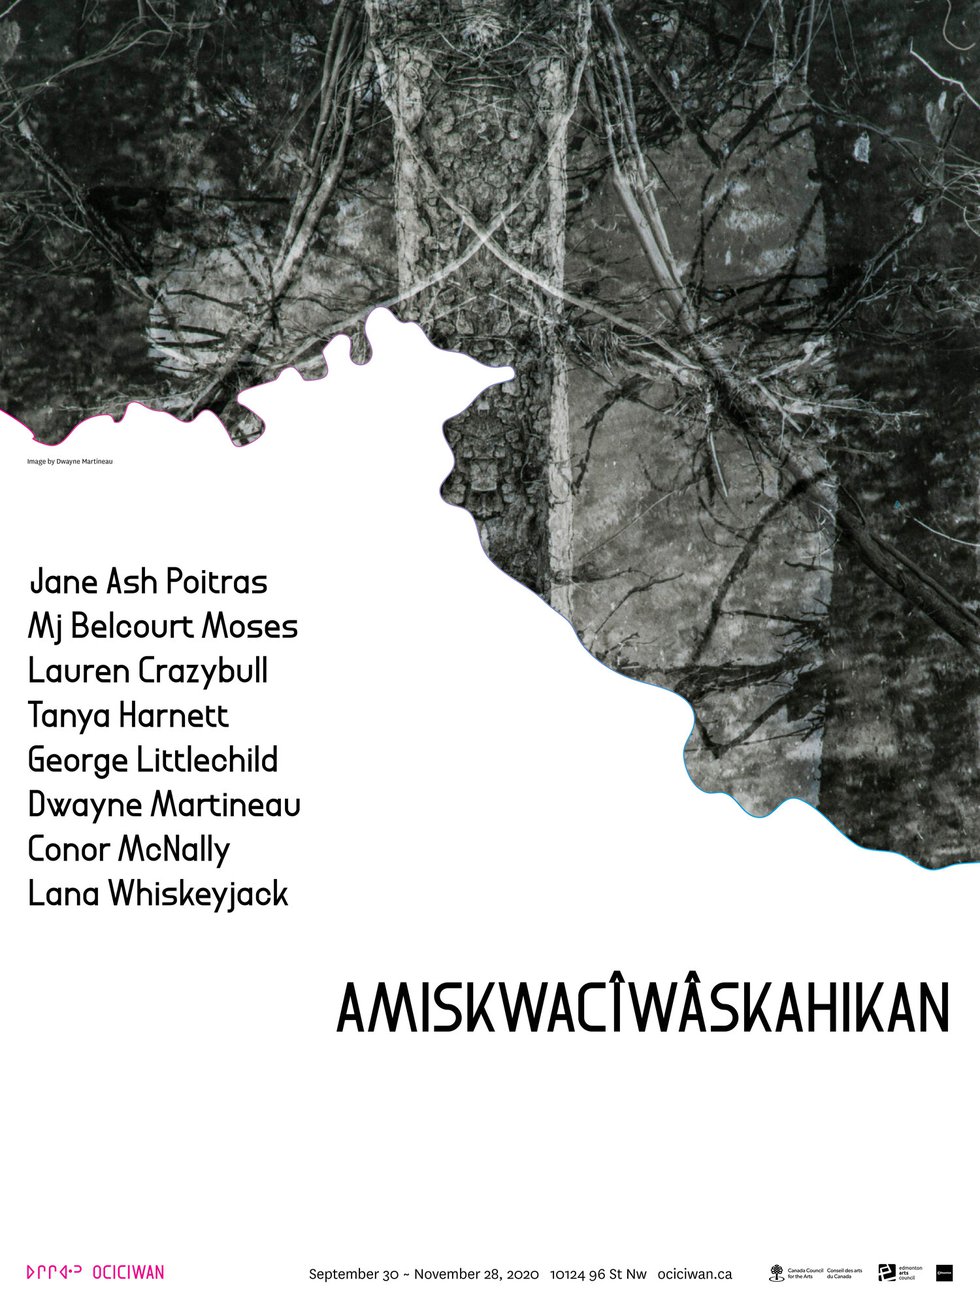 Ociciwan Contemporary Art Centre "amiskwacîwâskahikan," 2020